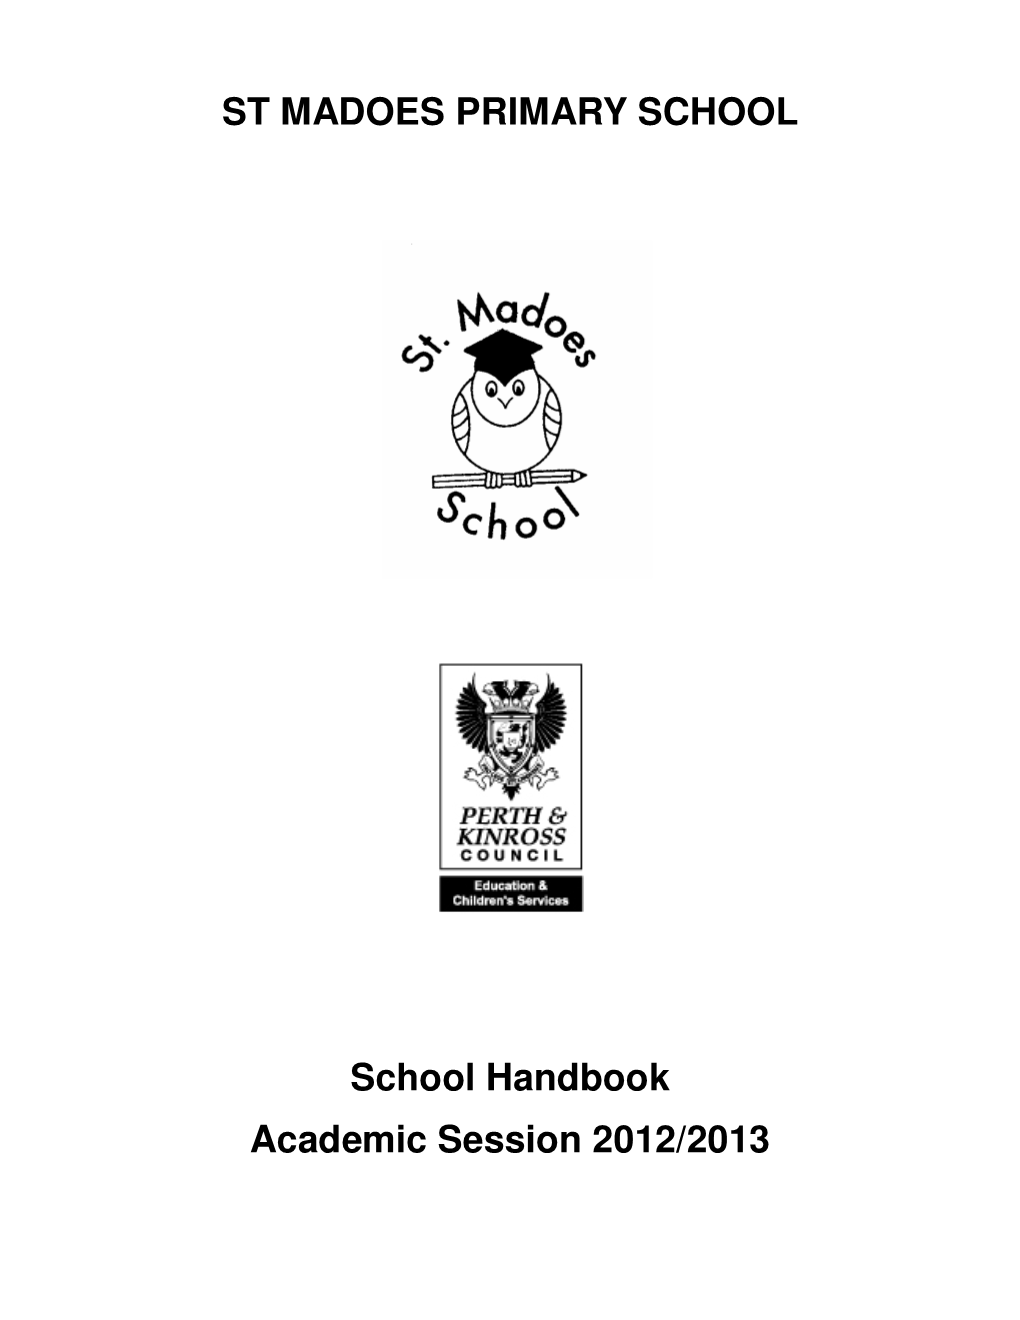 ST MADOES PRIMARY SCHOOL School Handbook Academic